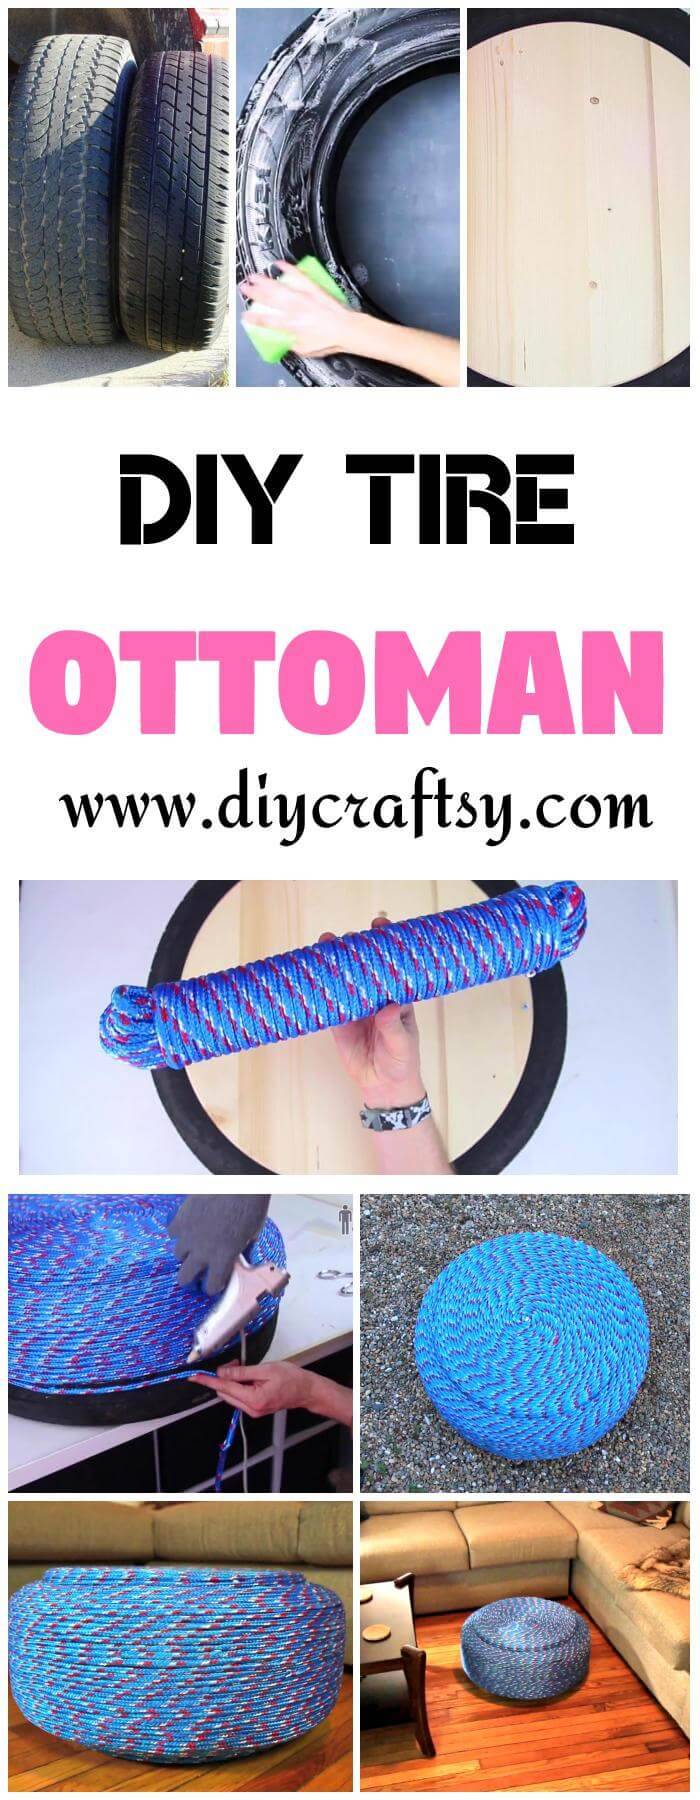 DIY Tire Ottoman